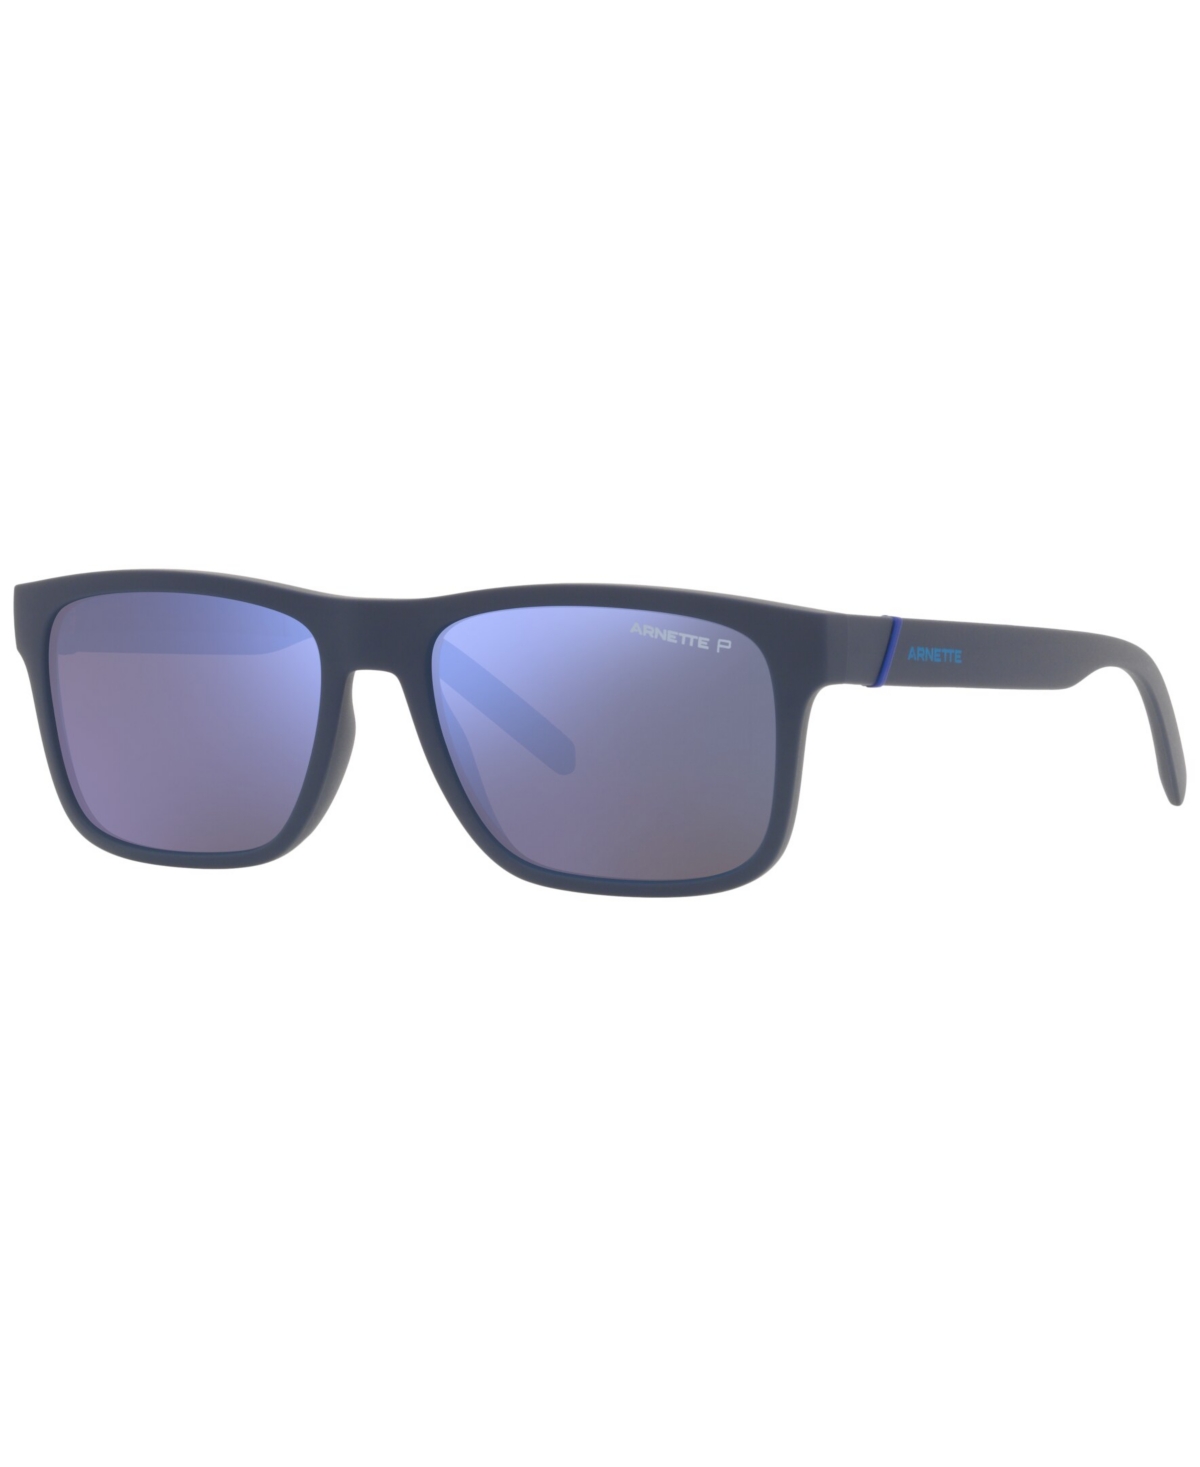 Unisex Polarized Sunglasses, AN4298 Bandra 55 - Matte Navy Blue